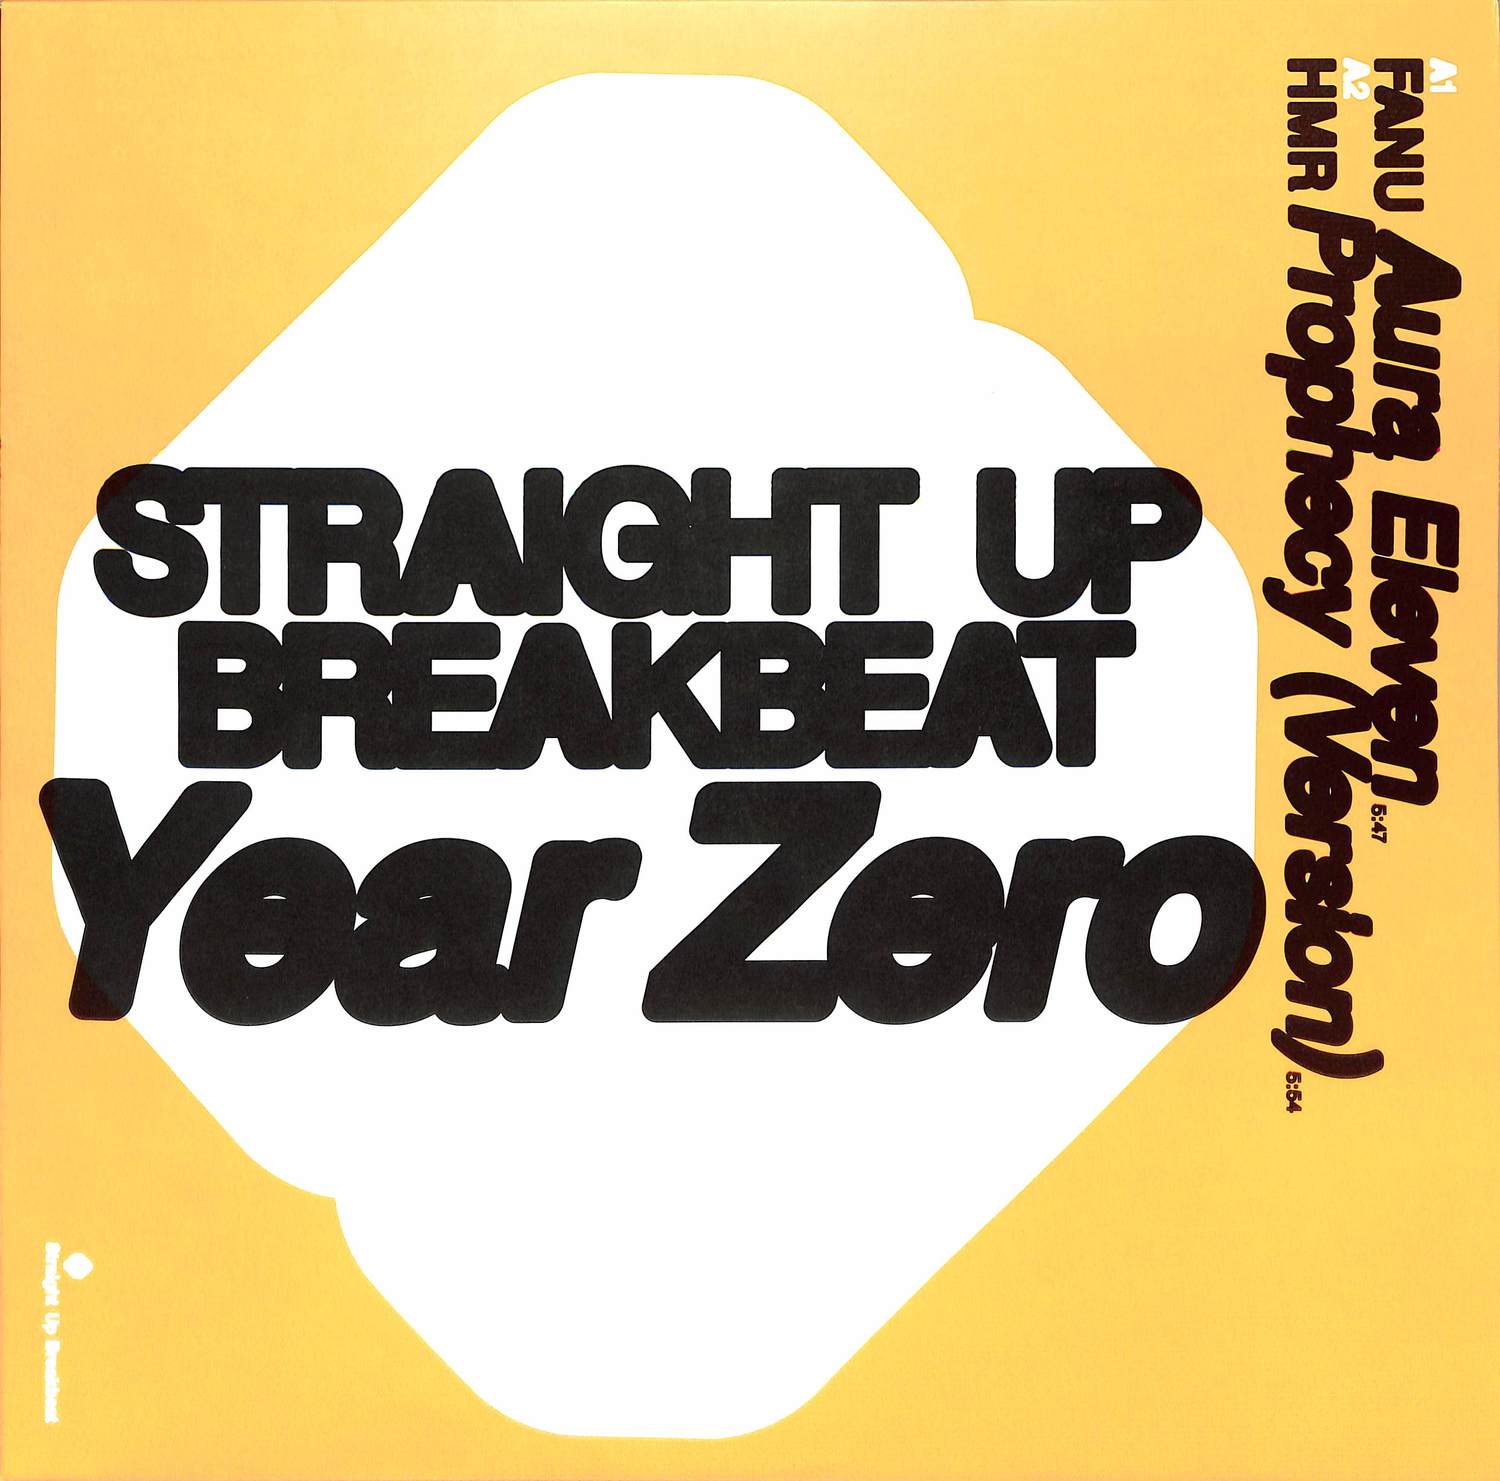 Various Artists - Year Zero EP